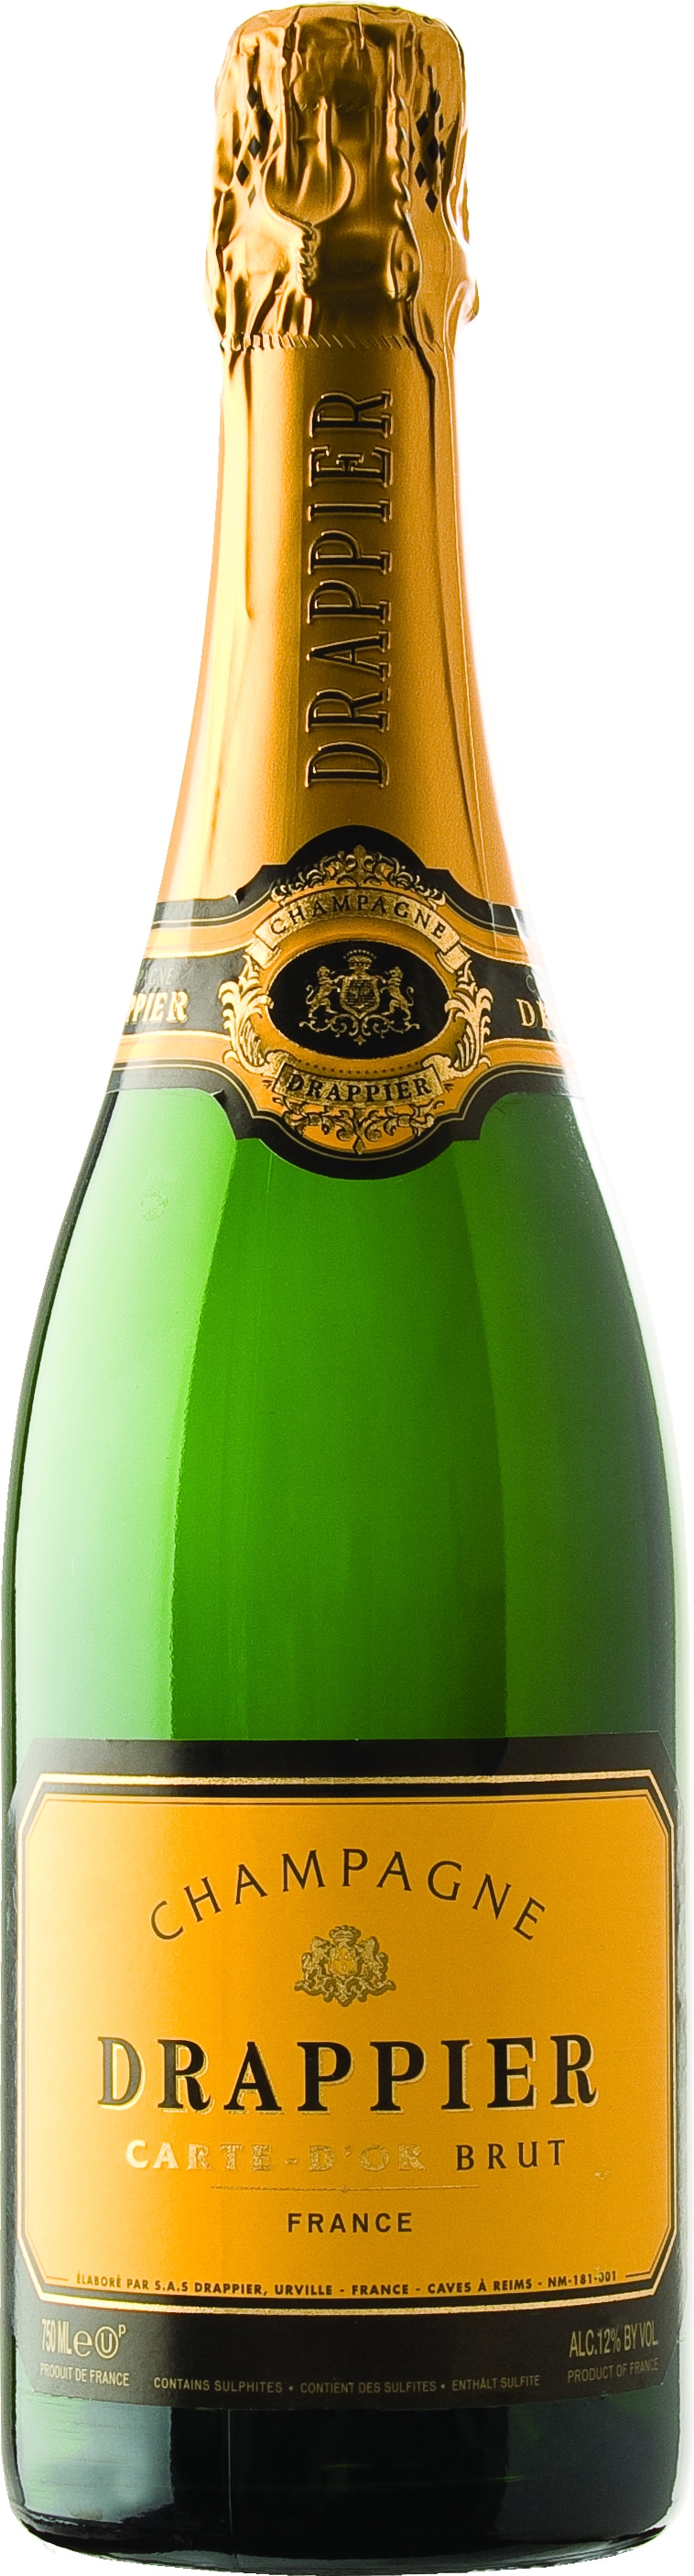 Drappier Carte D'or Brut champagne.jpg